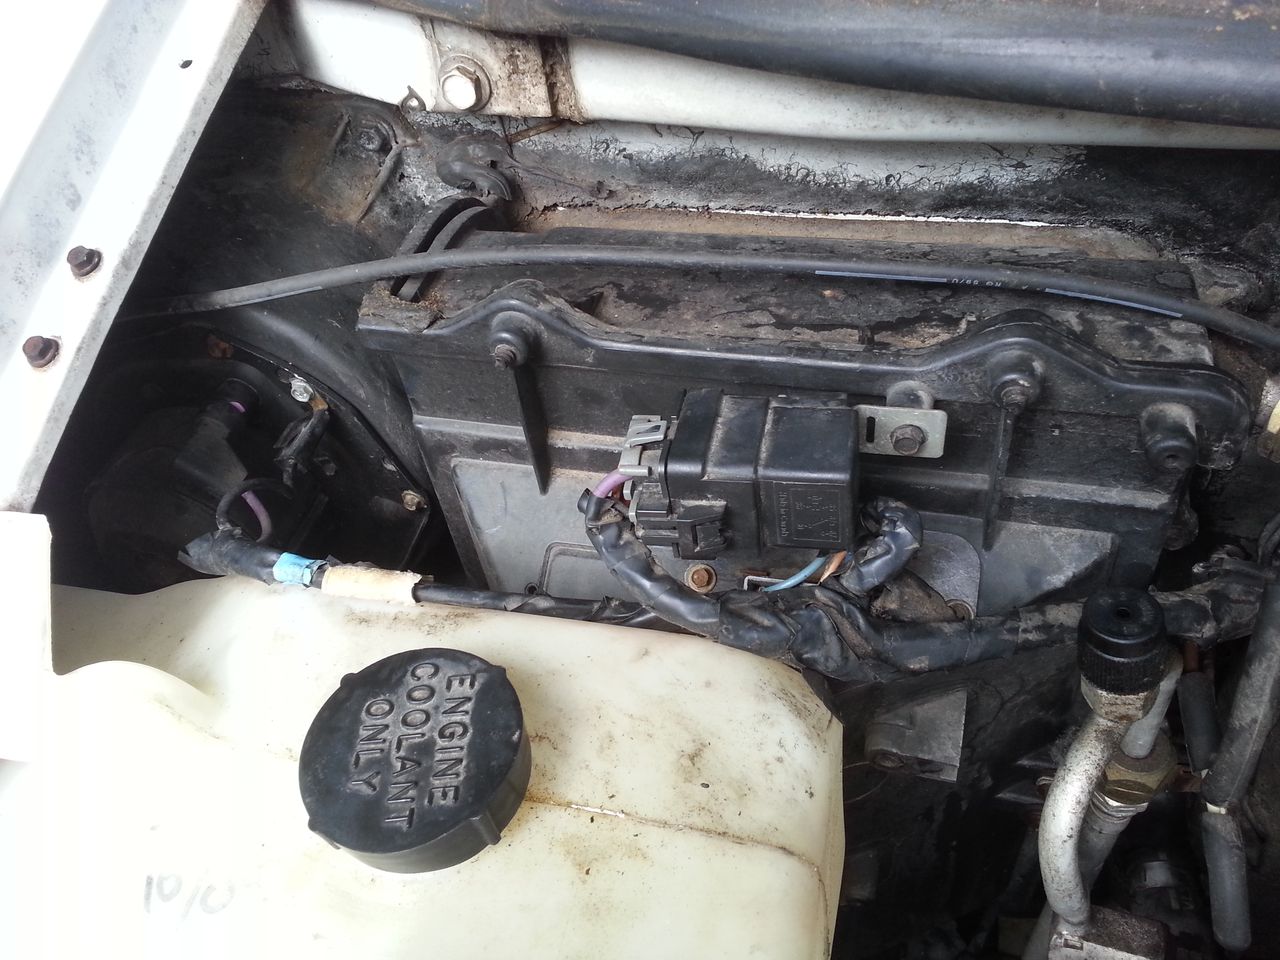 1995 Chevy Van G20 A/C Heat Blower Fan Repair | ZEDIC.COM 85 chevy truck dash wiring diagram 